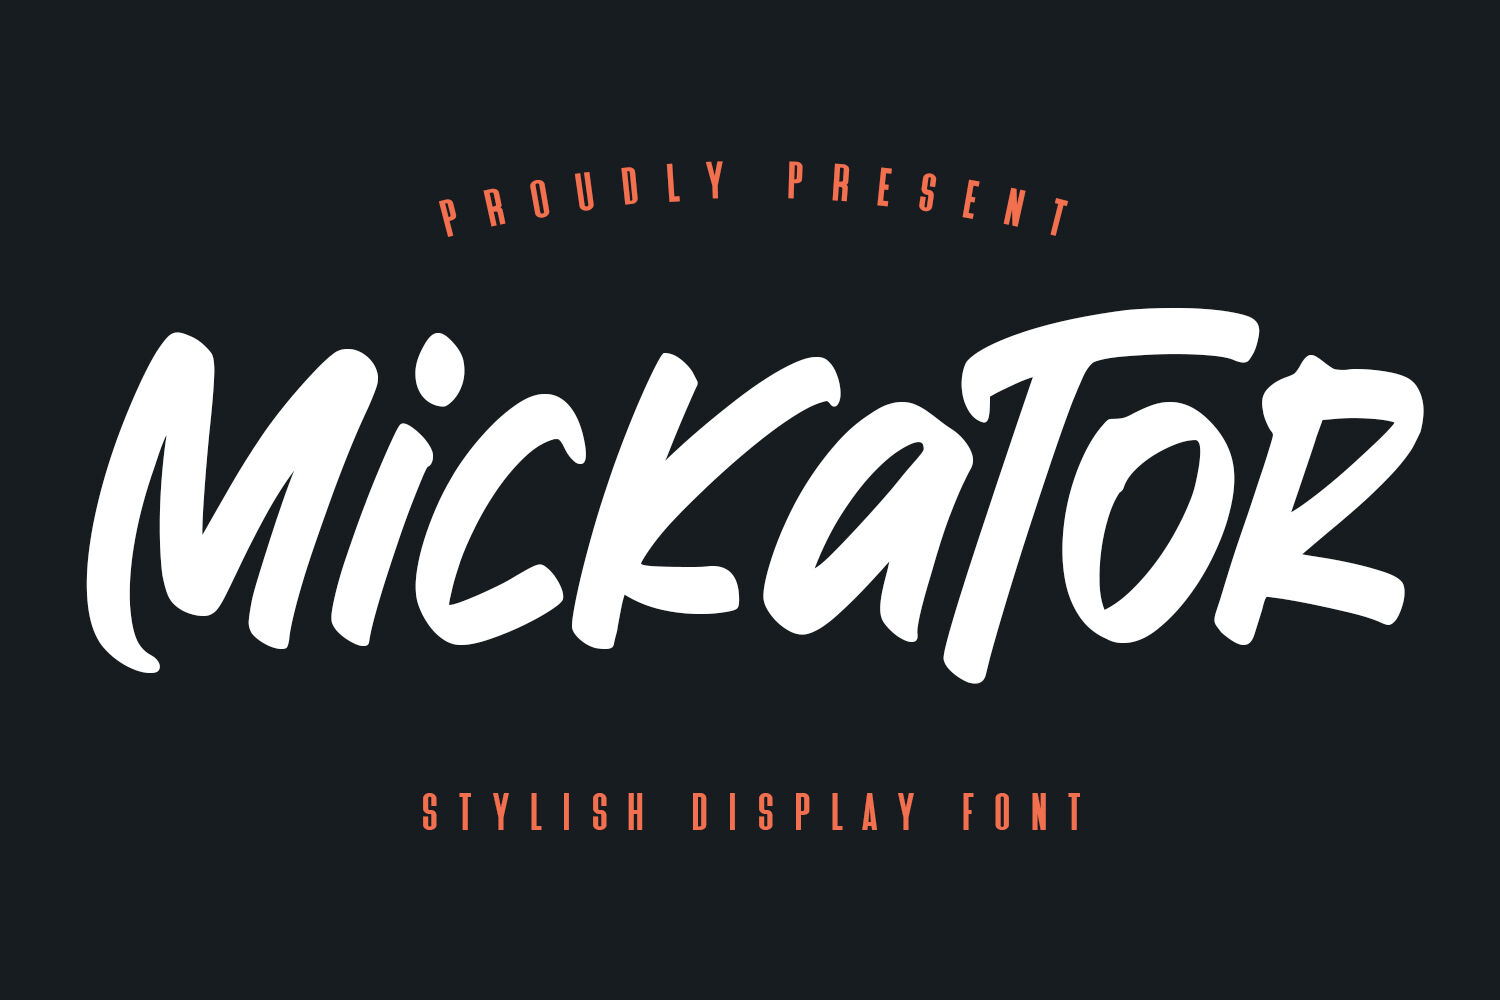 Mickator Stylish Display Font By Maulana Creative Thehungryjpeg Com